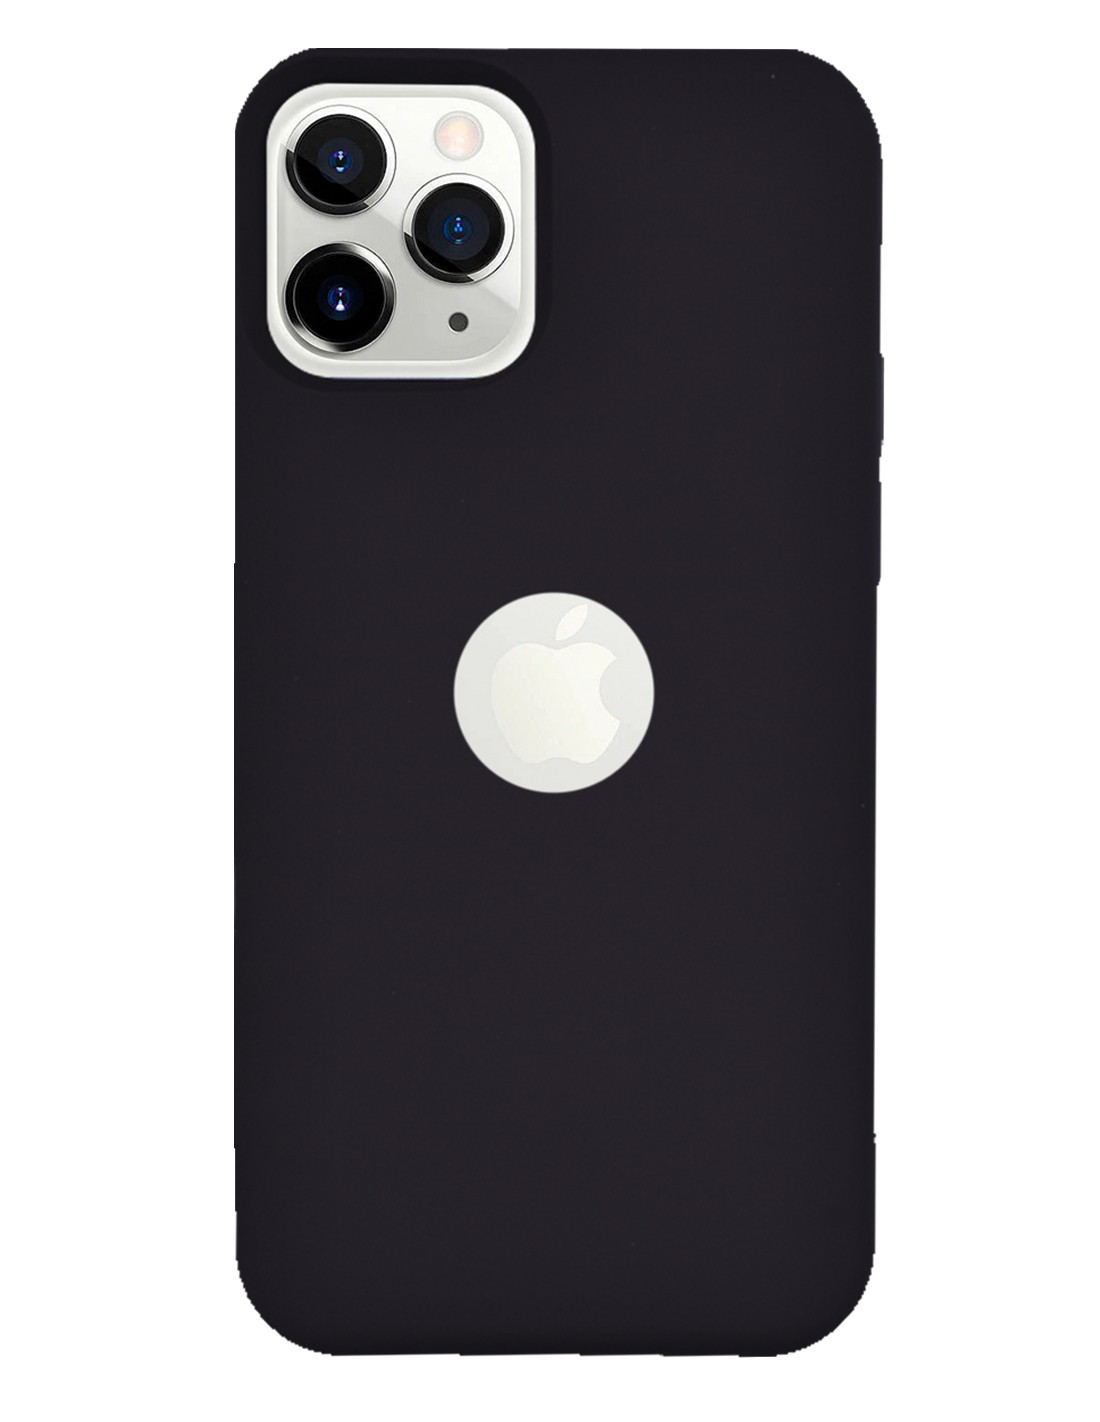 Cool Funda Silicona Negra para iPhone 11 Pro Max